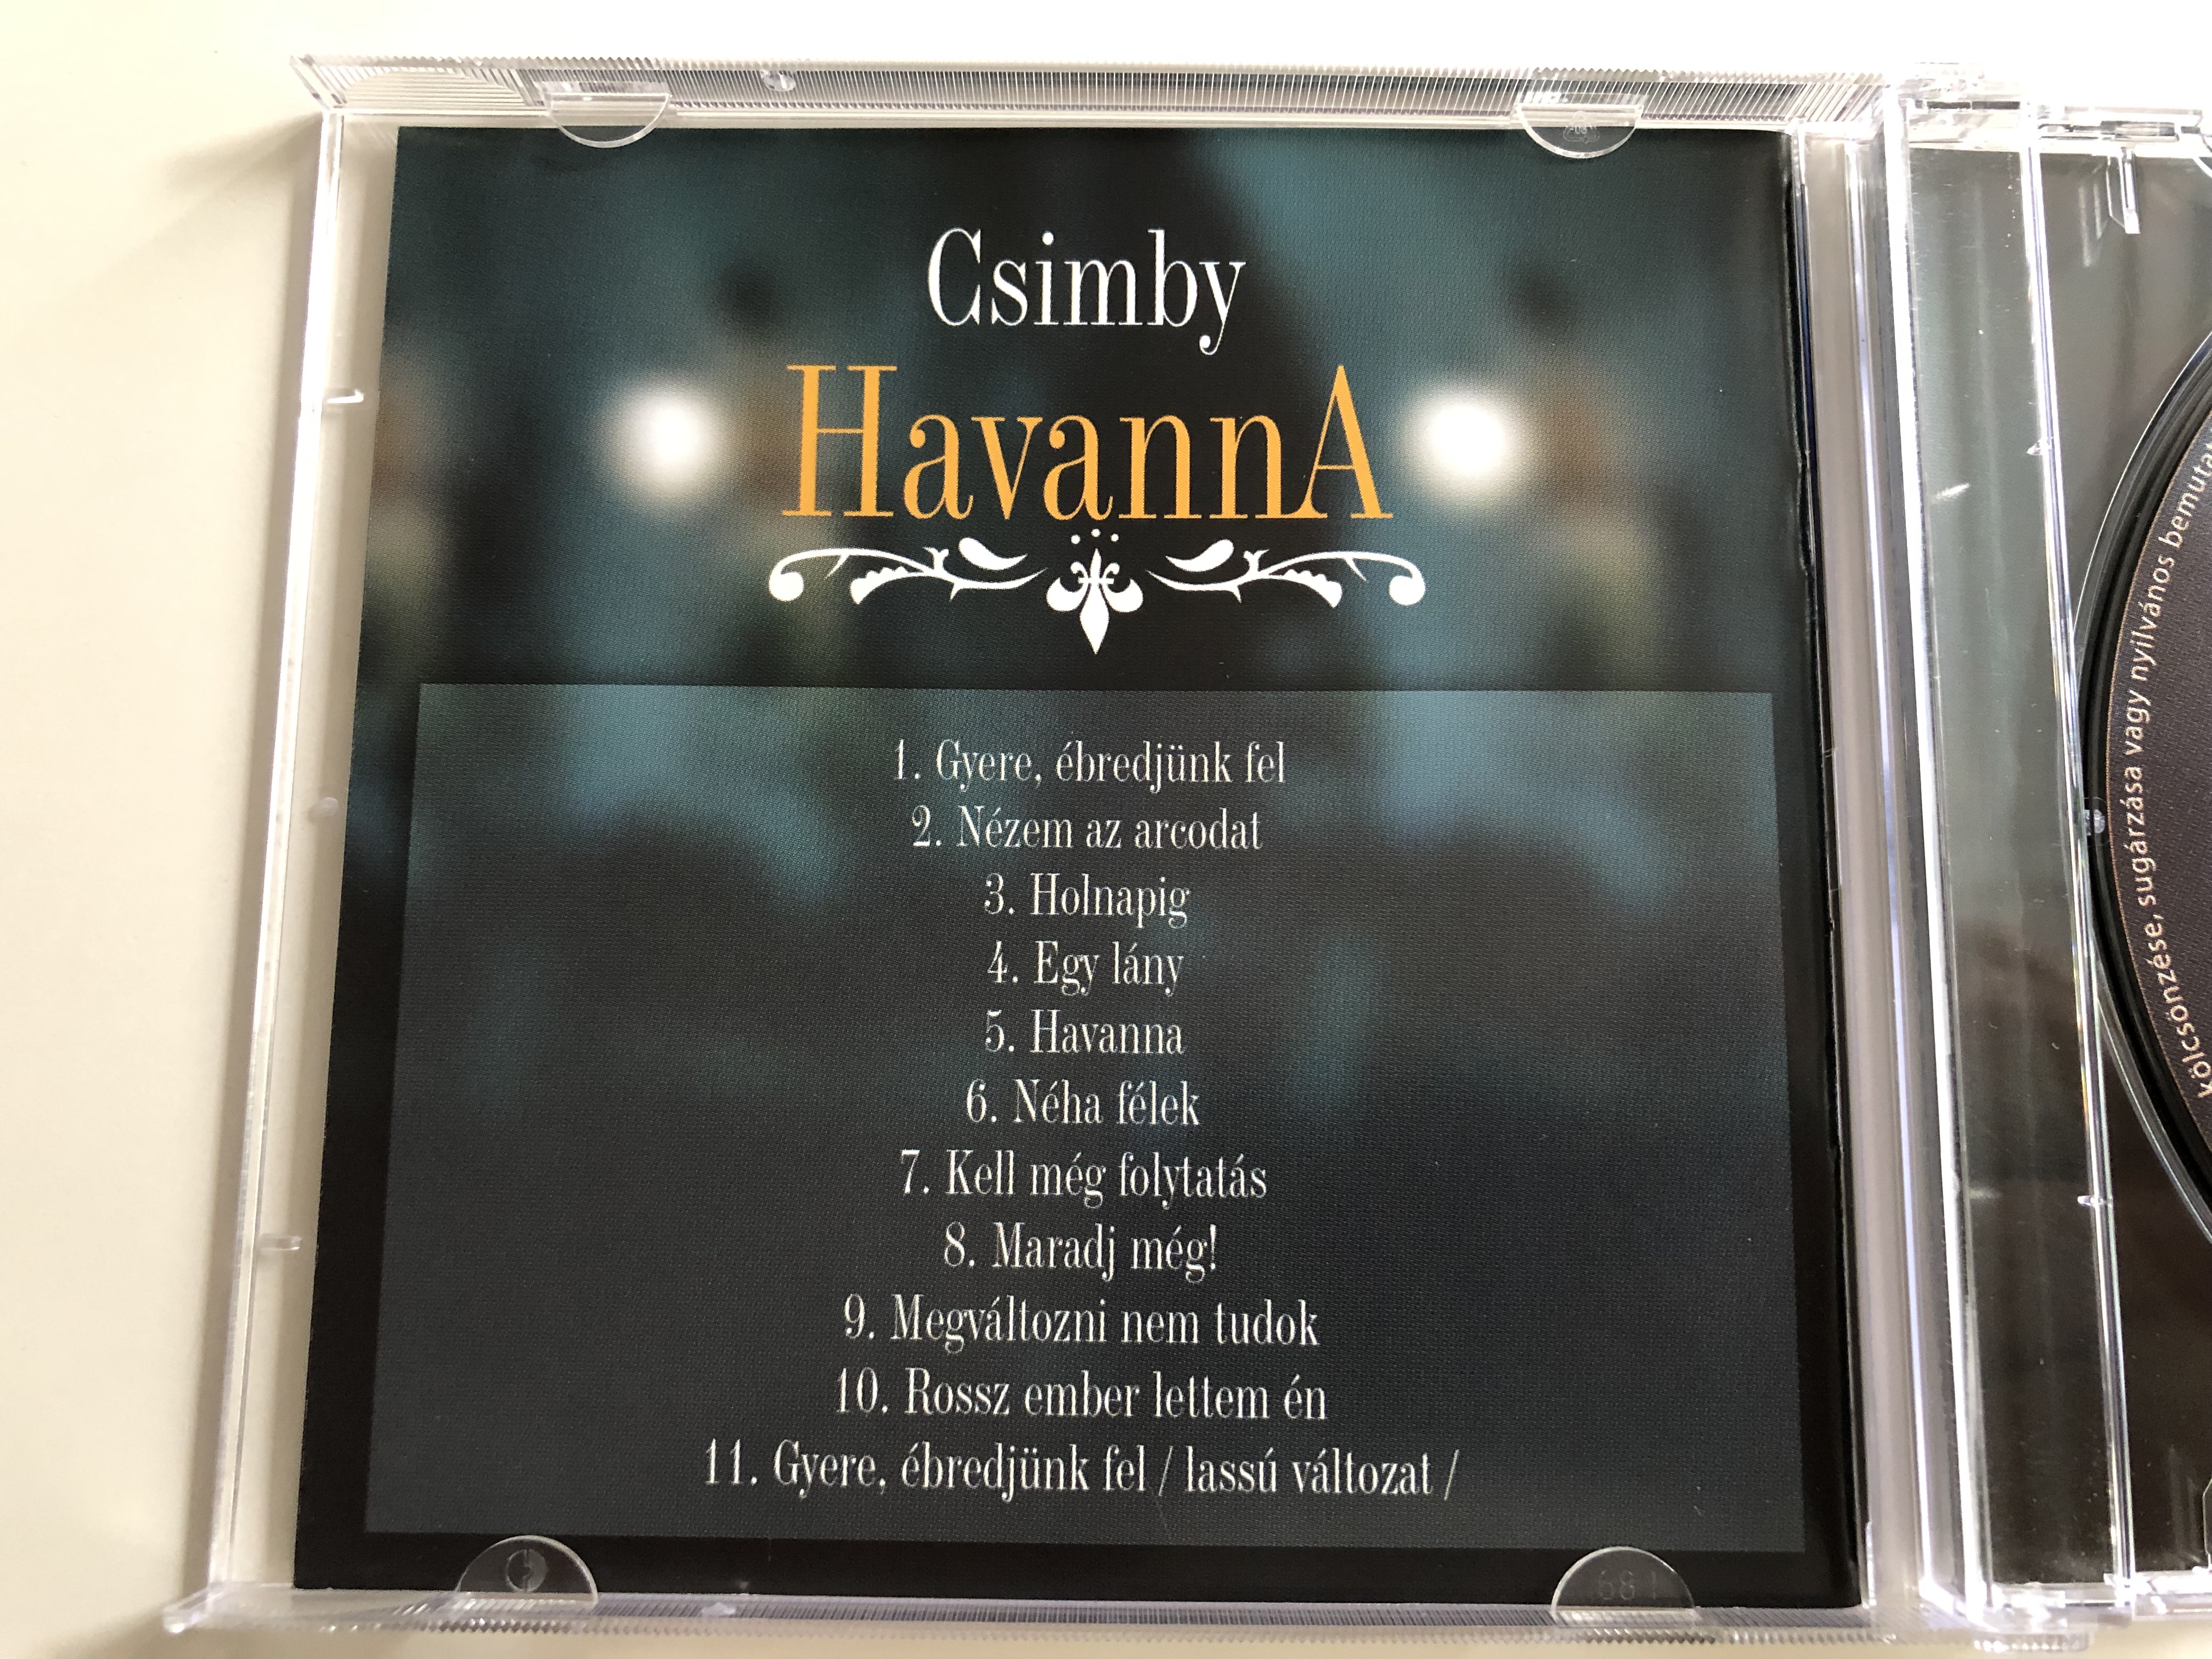 csimby-havanna-gold-record-audio-cd-2007-gr-200702-5-.jpg